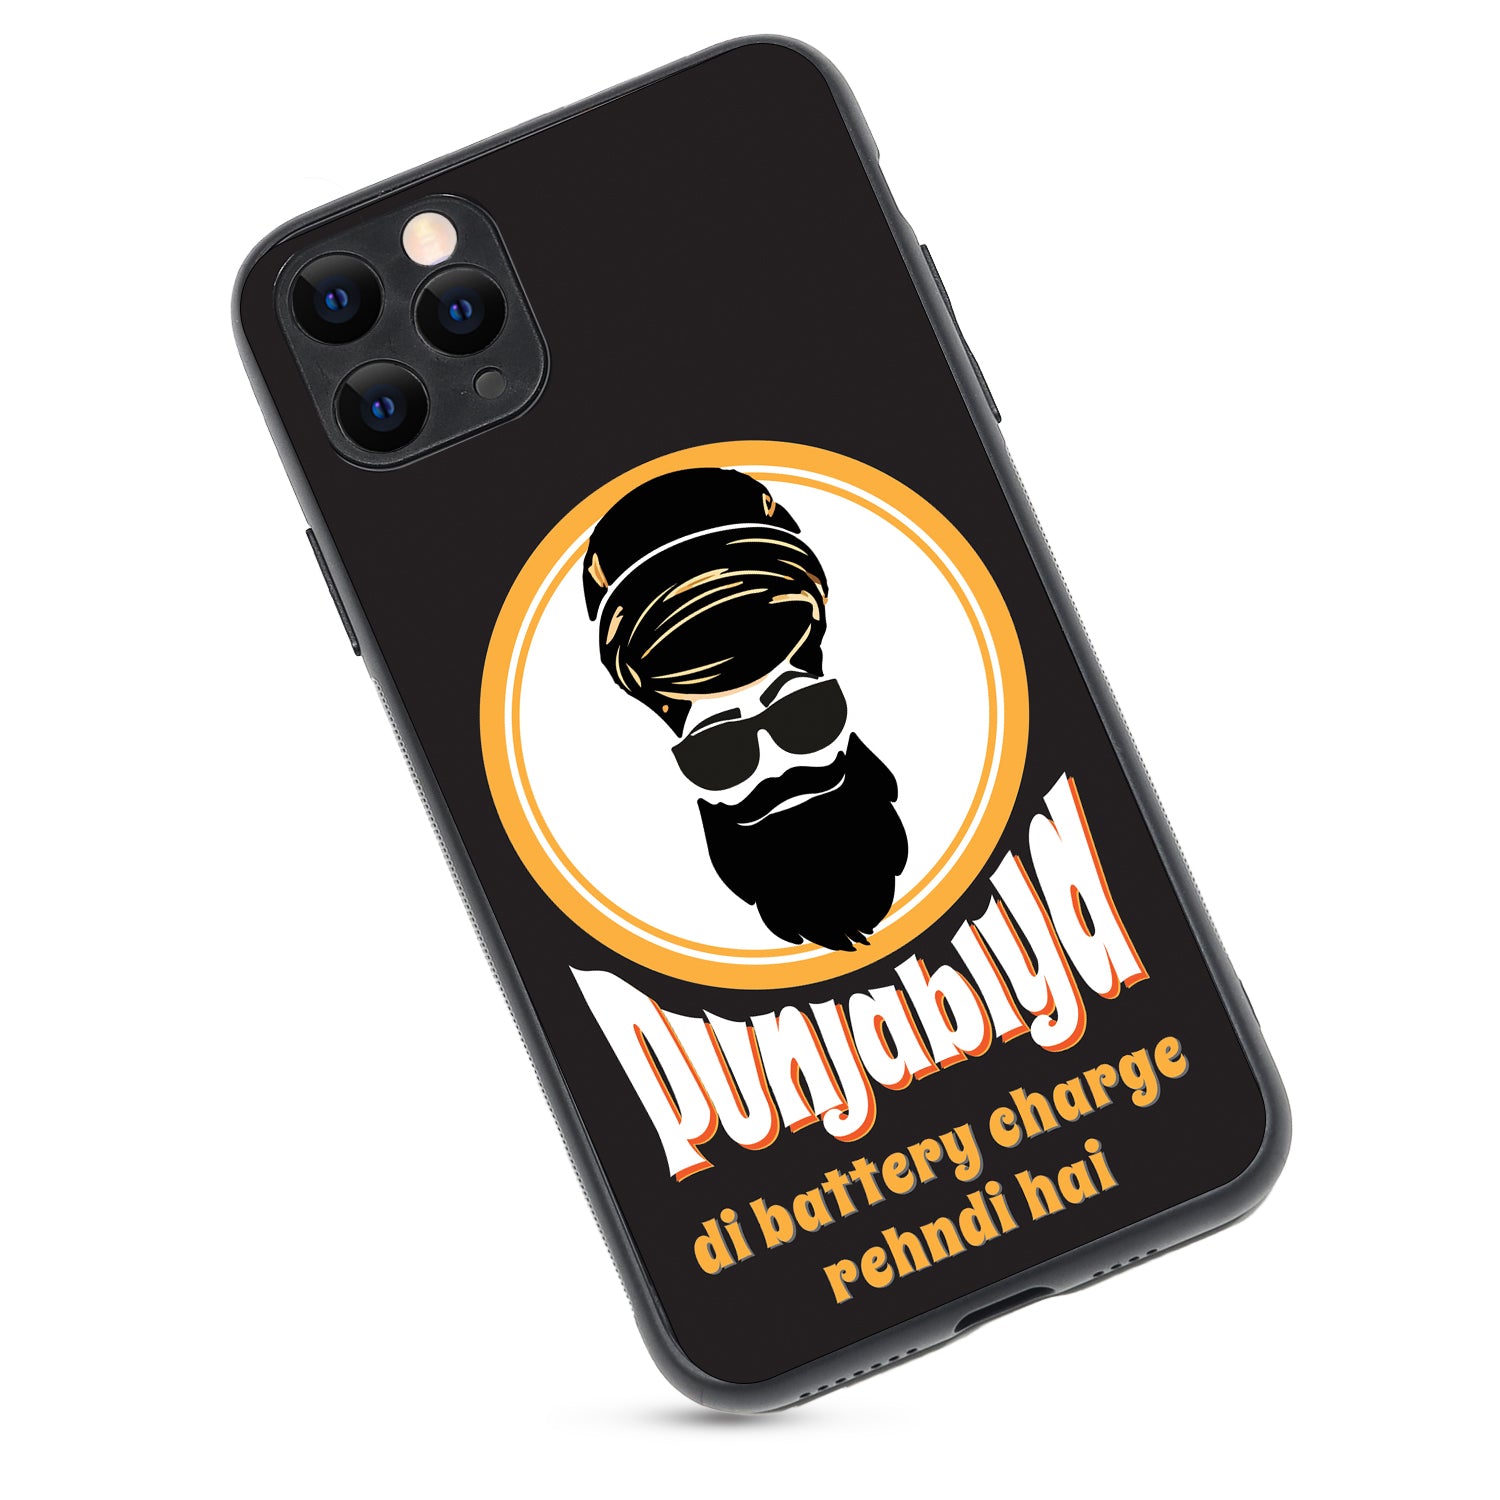 Punjabiyan Di Battery Masculine iPhone 11 Pro Max Case